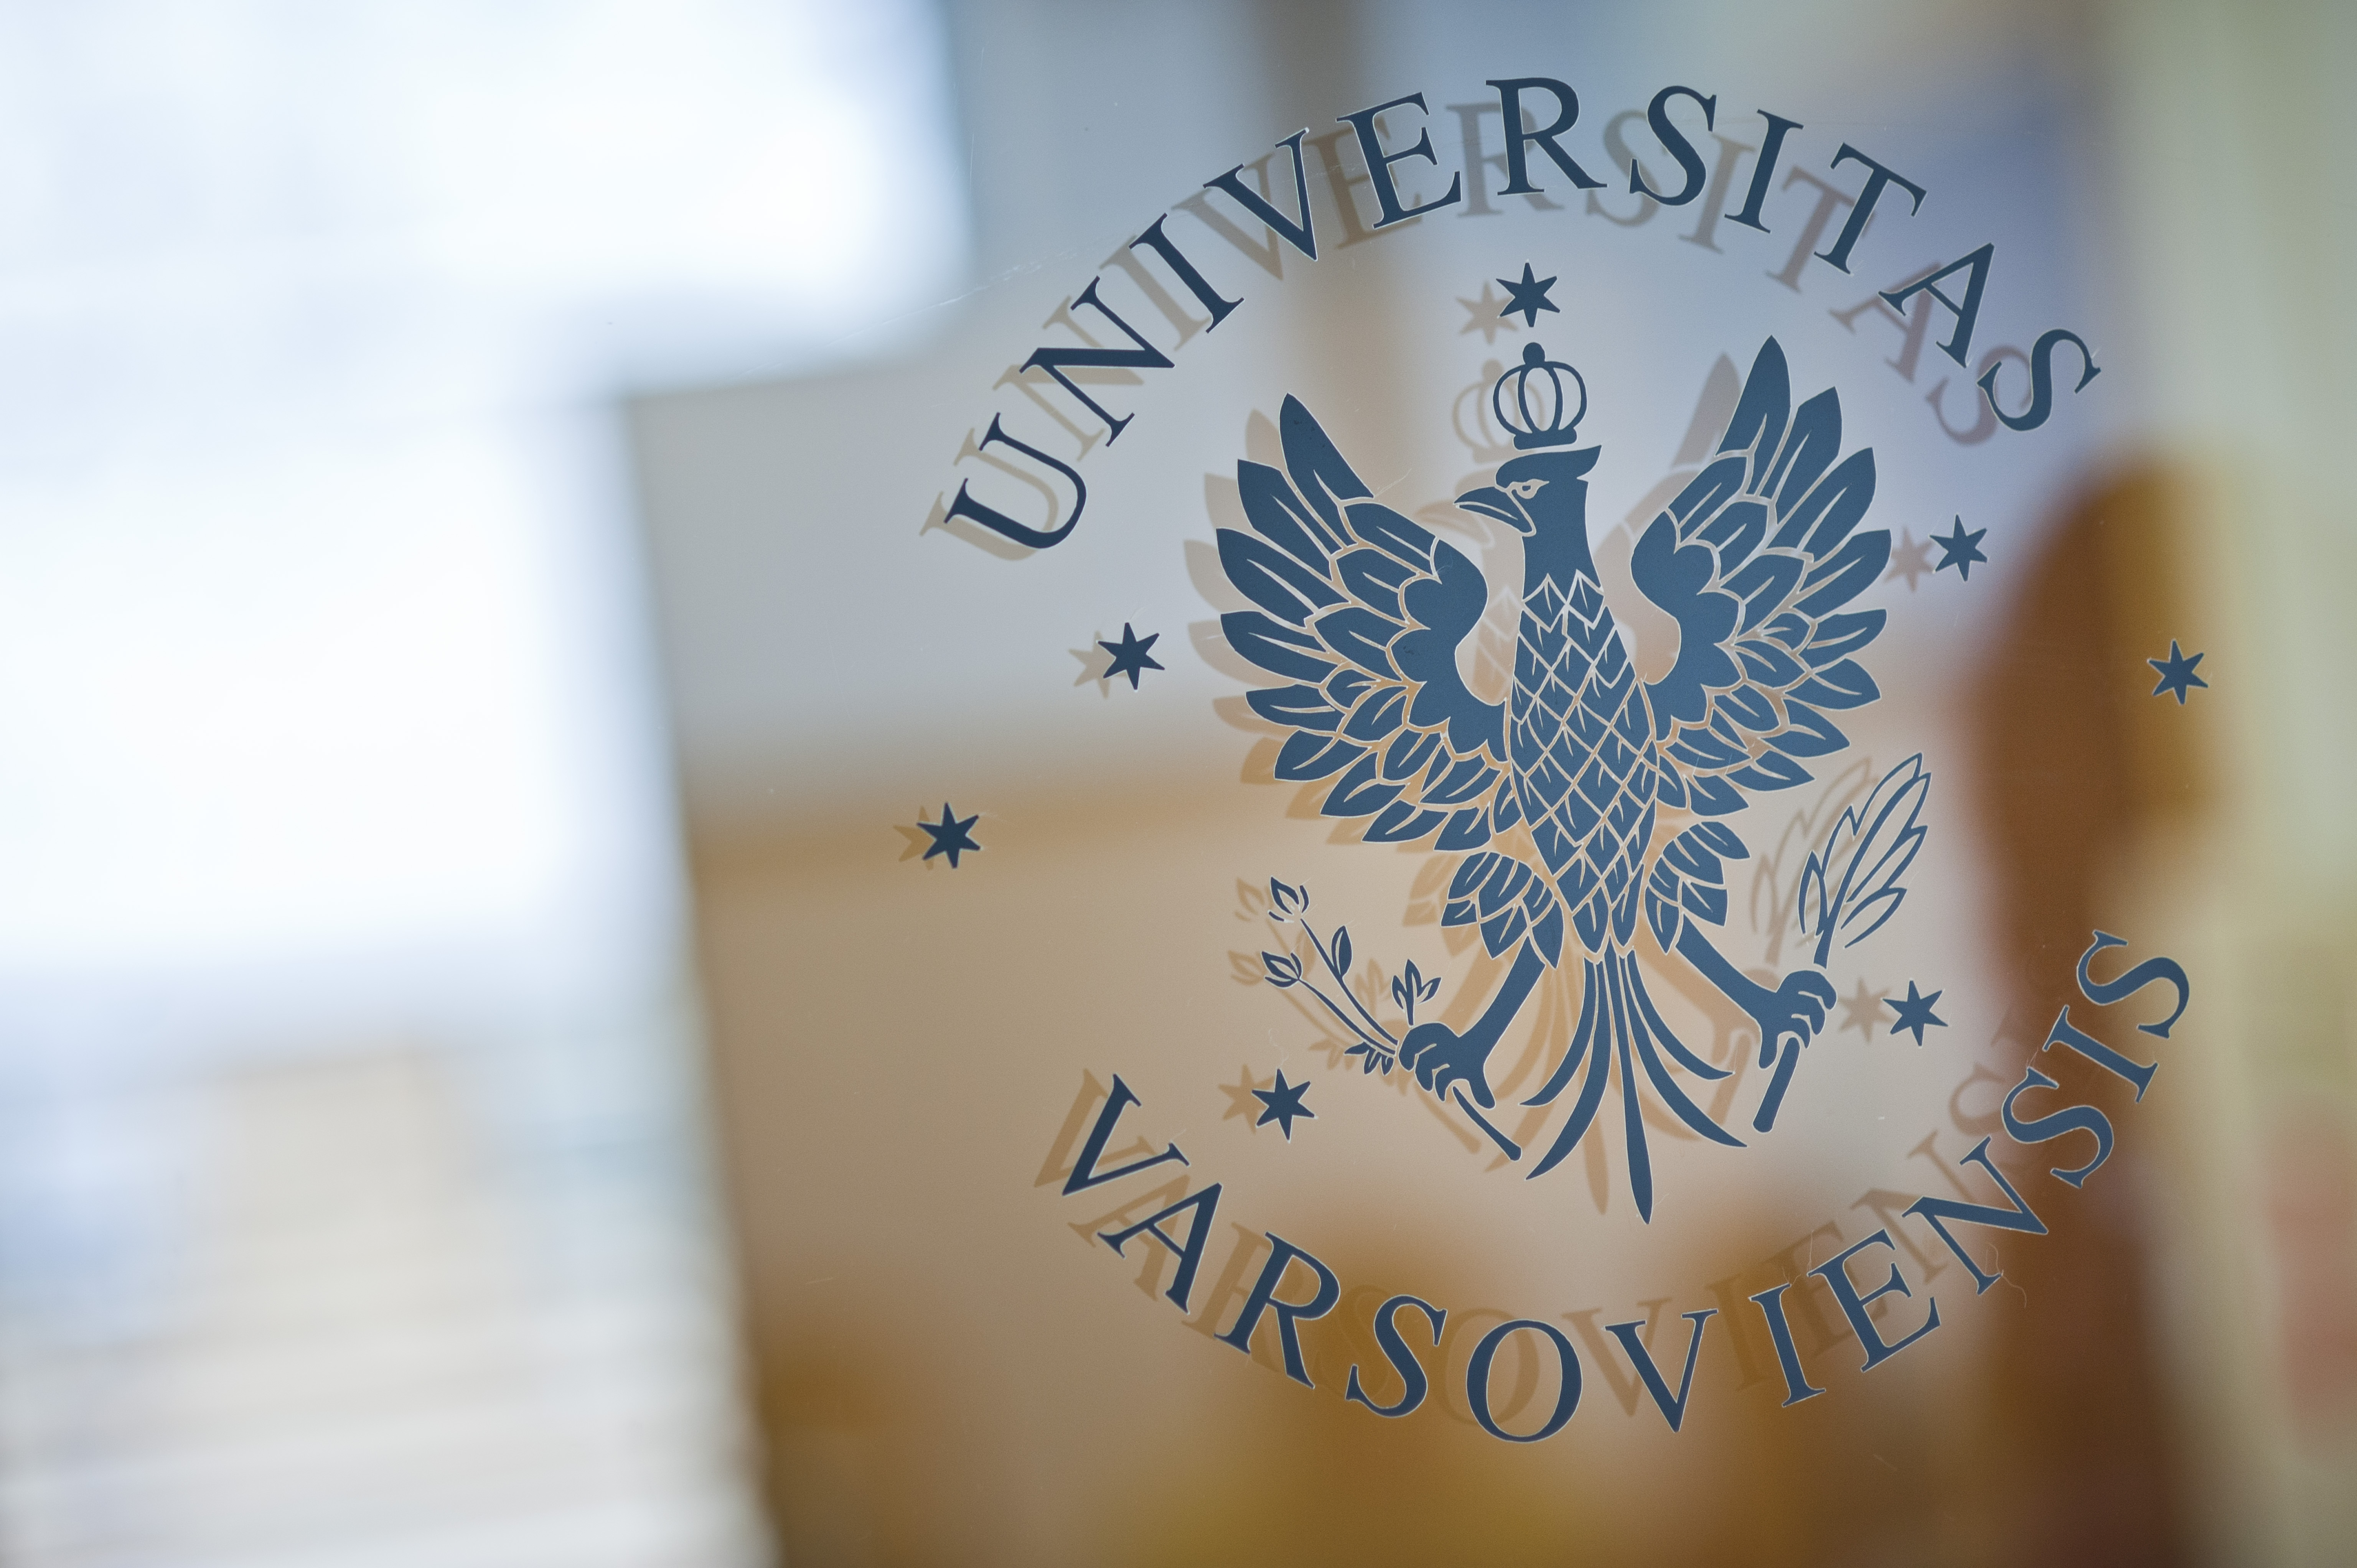 Uniwersytet Warszawski – student studia (8)